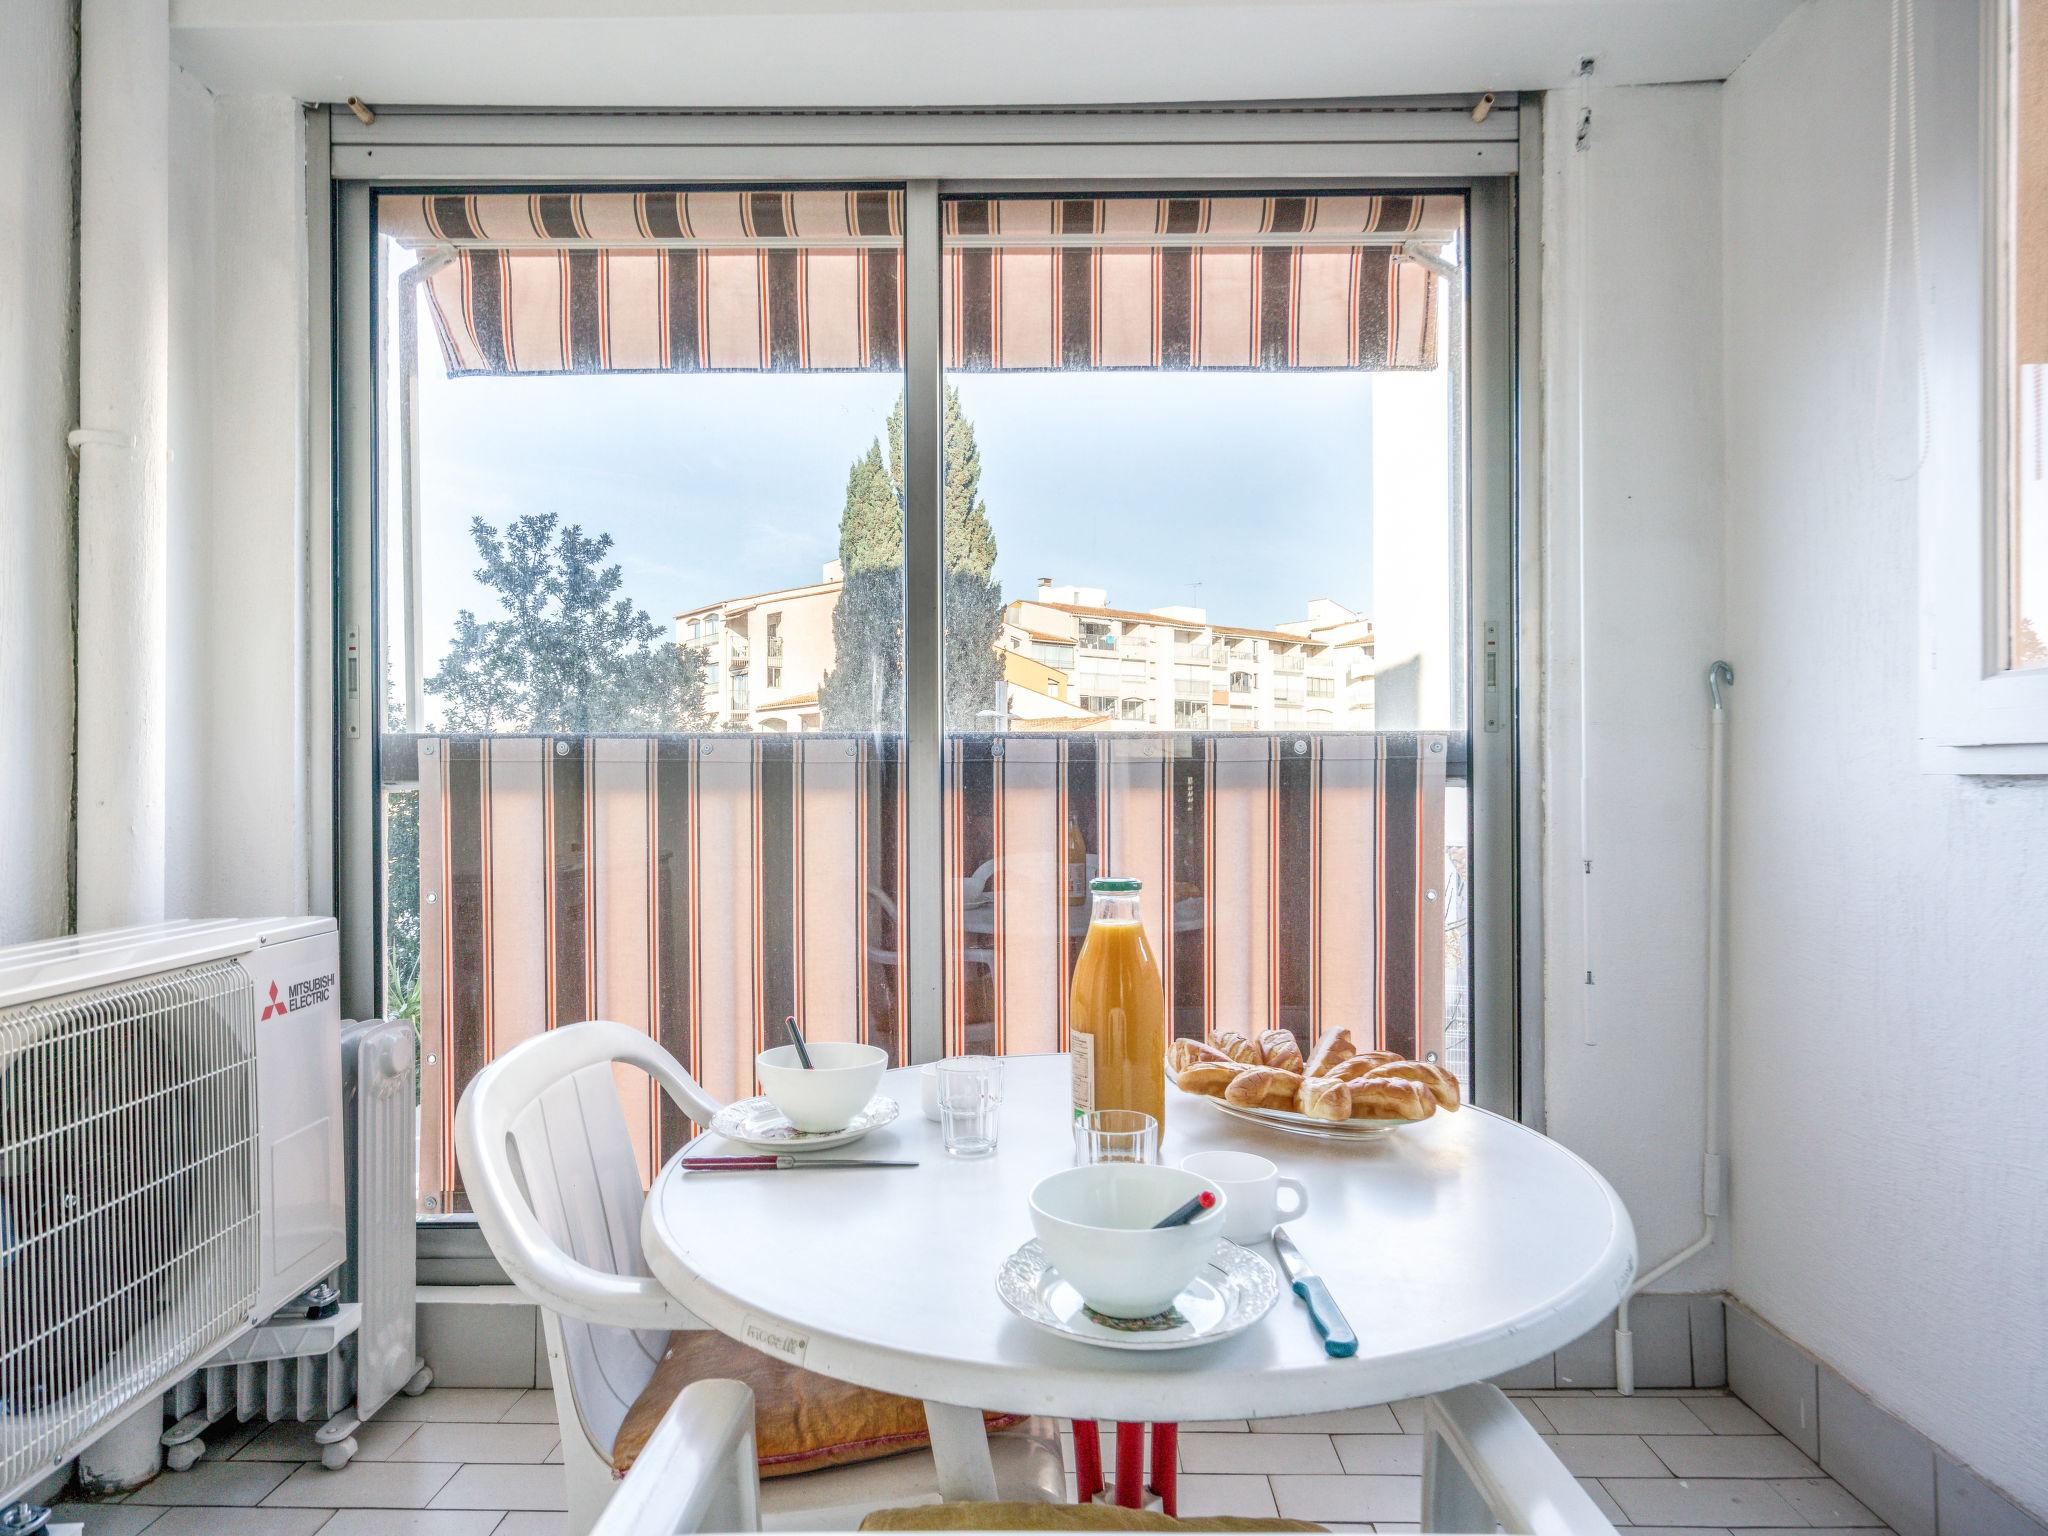 Foto 6 - Apartment in Agde mit blick aufs meer